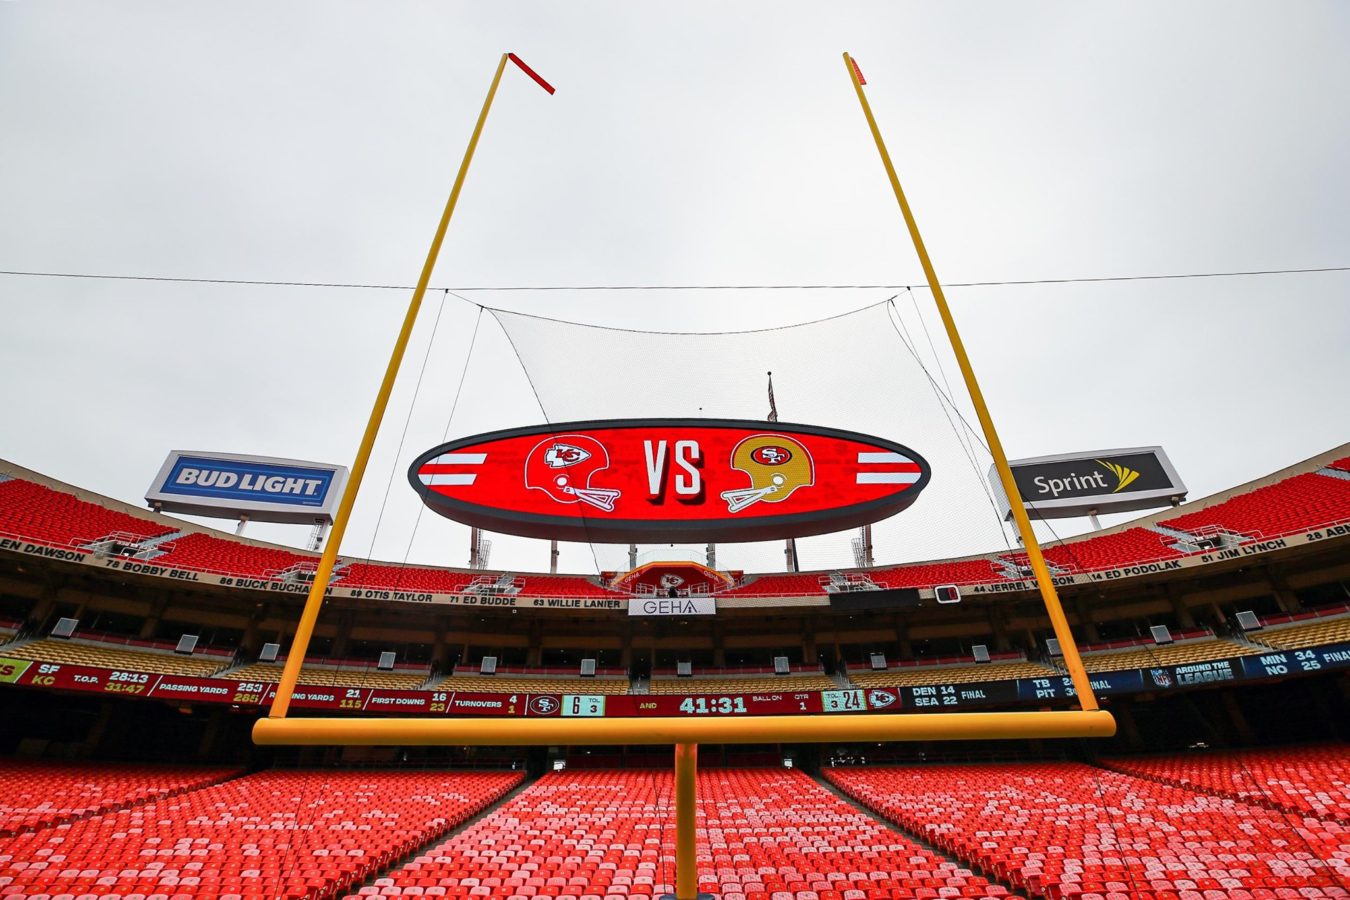 Chiefs' stadium future hinges on the development around it